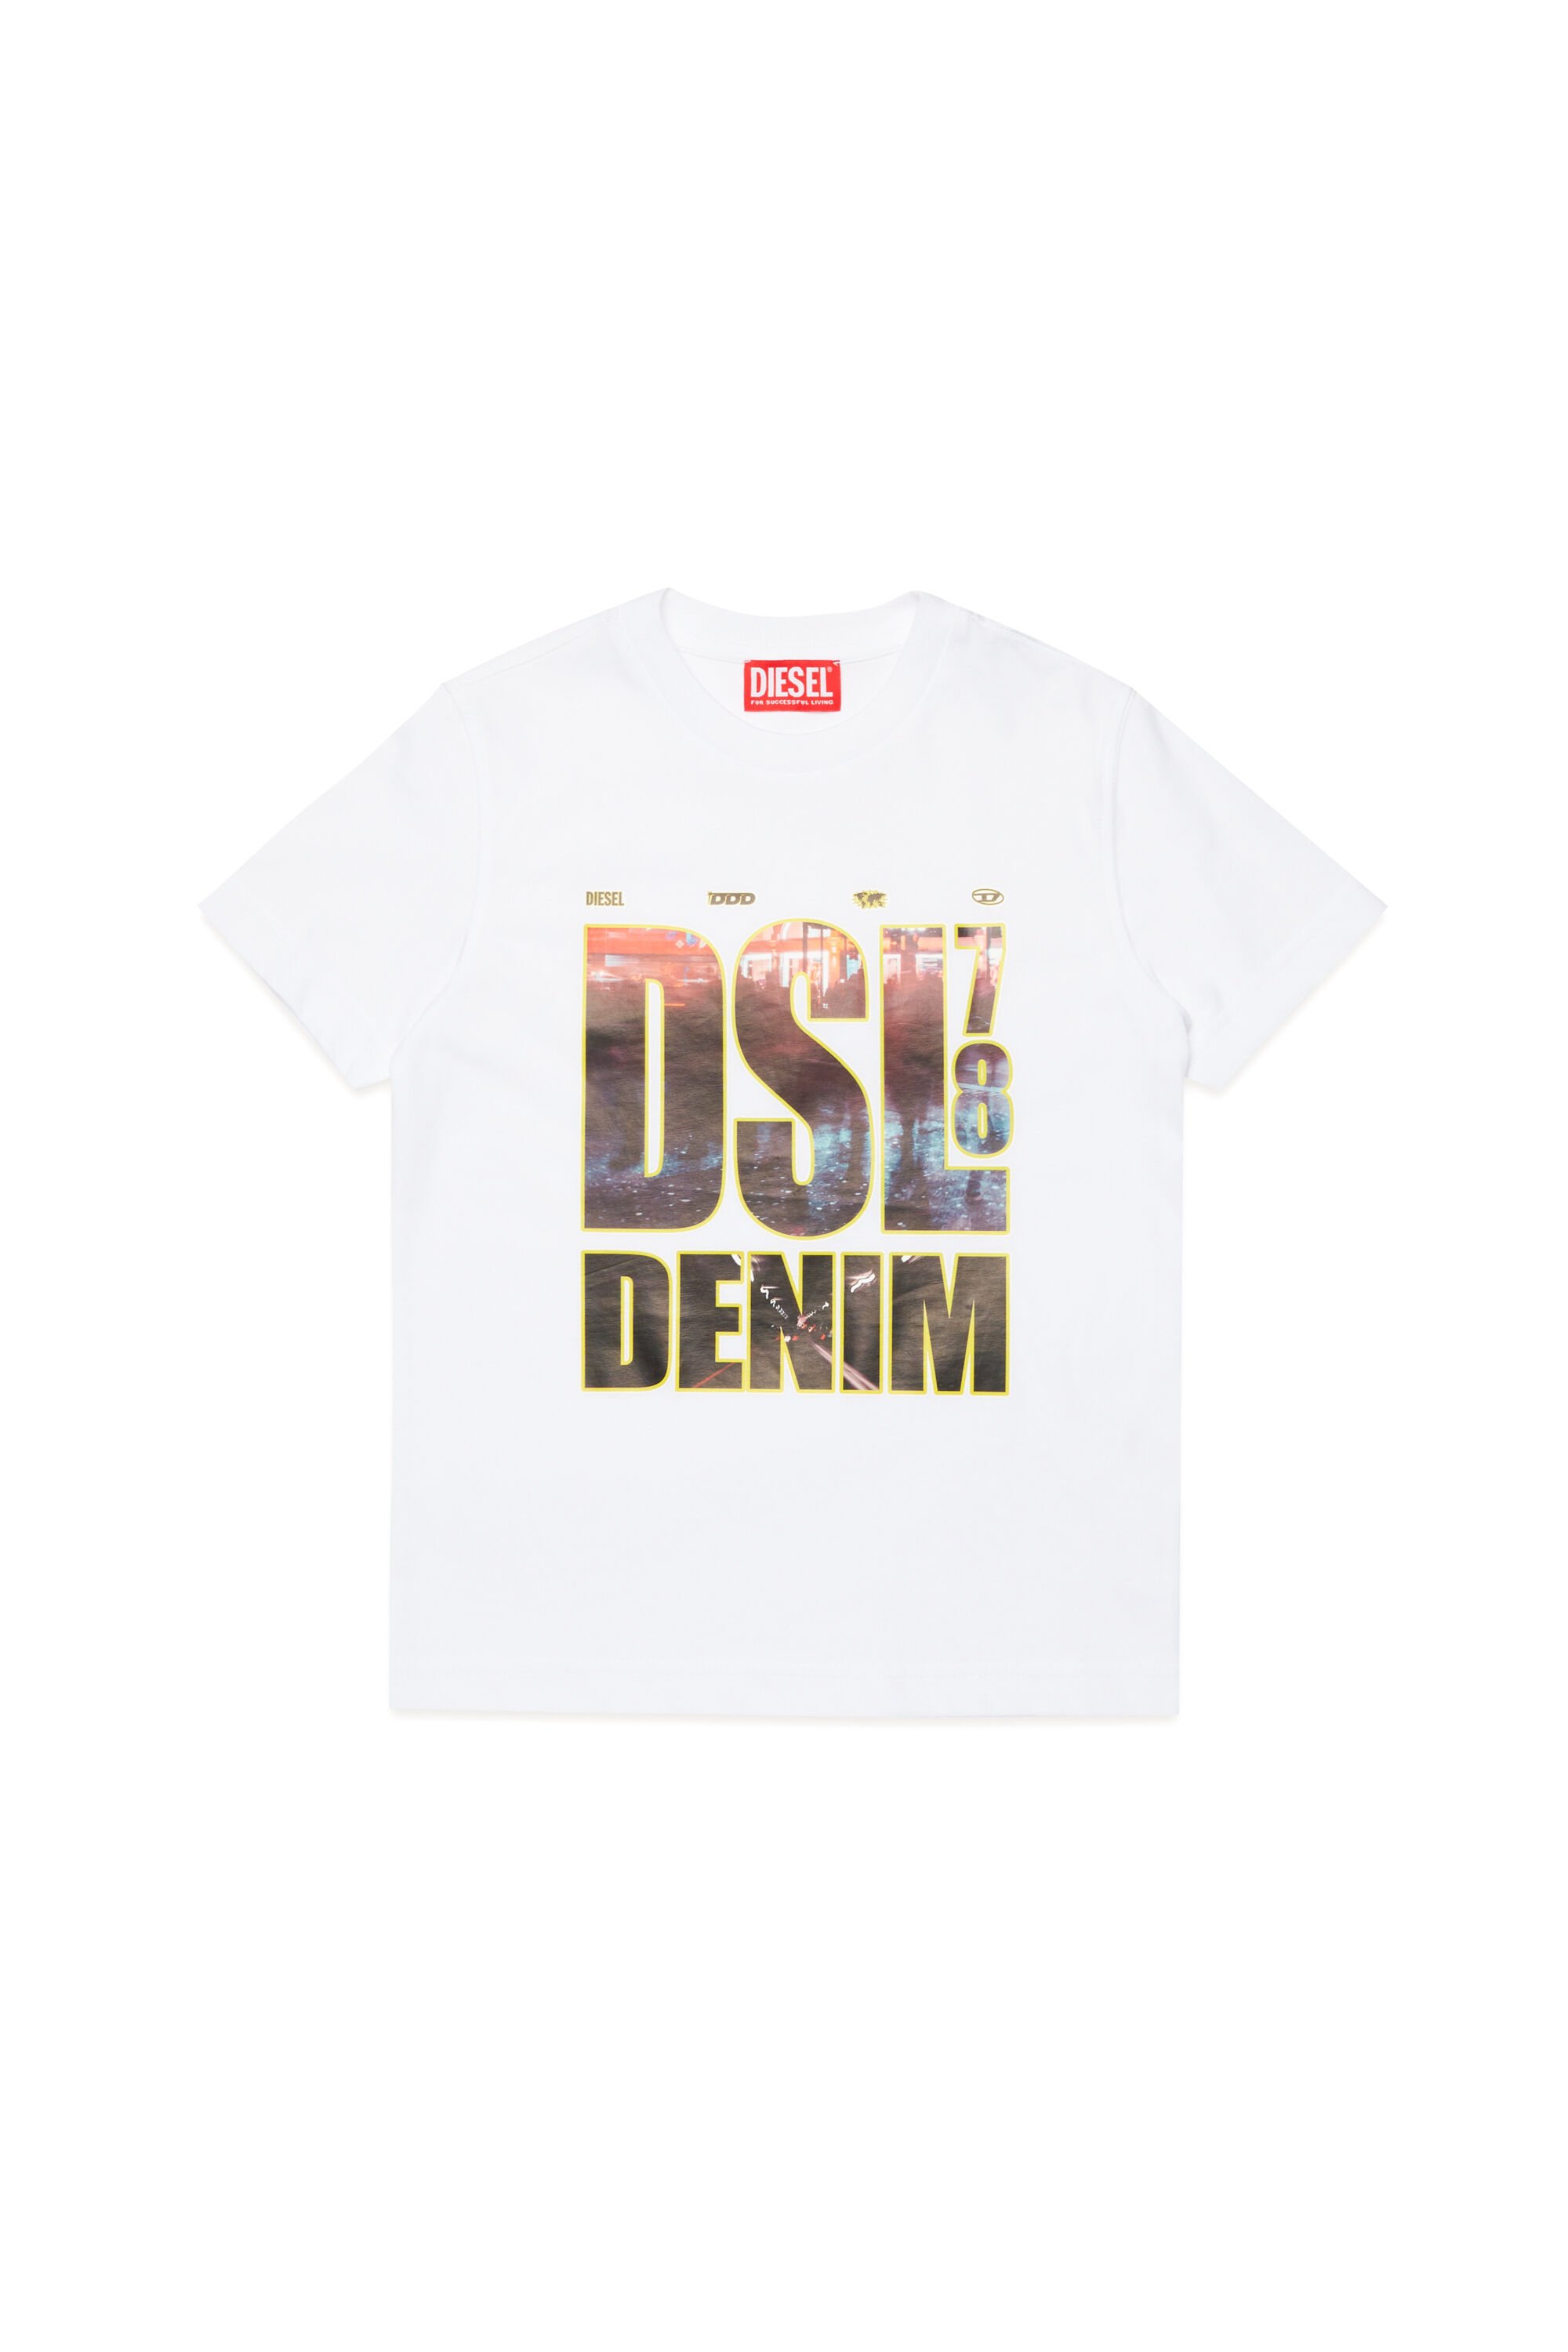 Diesel - TDIEGORL7, Homme T-shirt avec imprimé photo Diesel Denim 78 in Blanc - Image 1